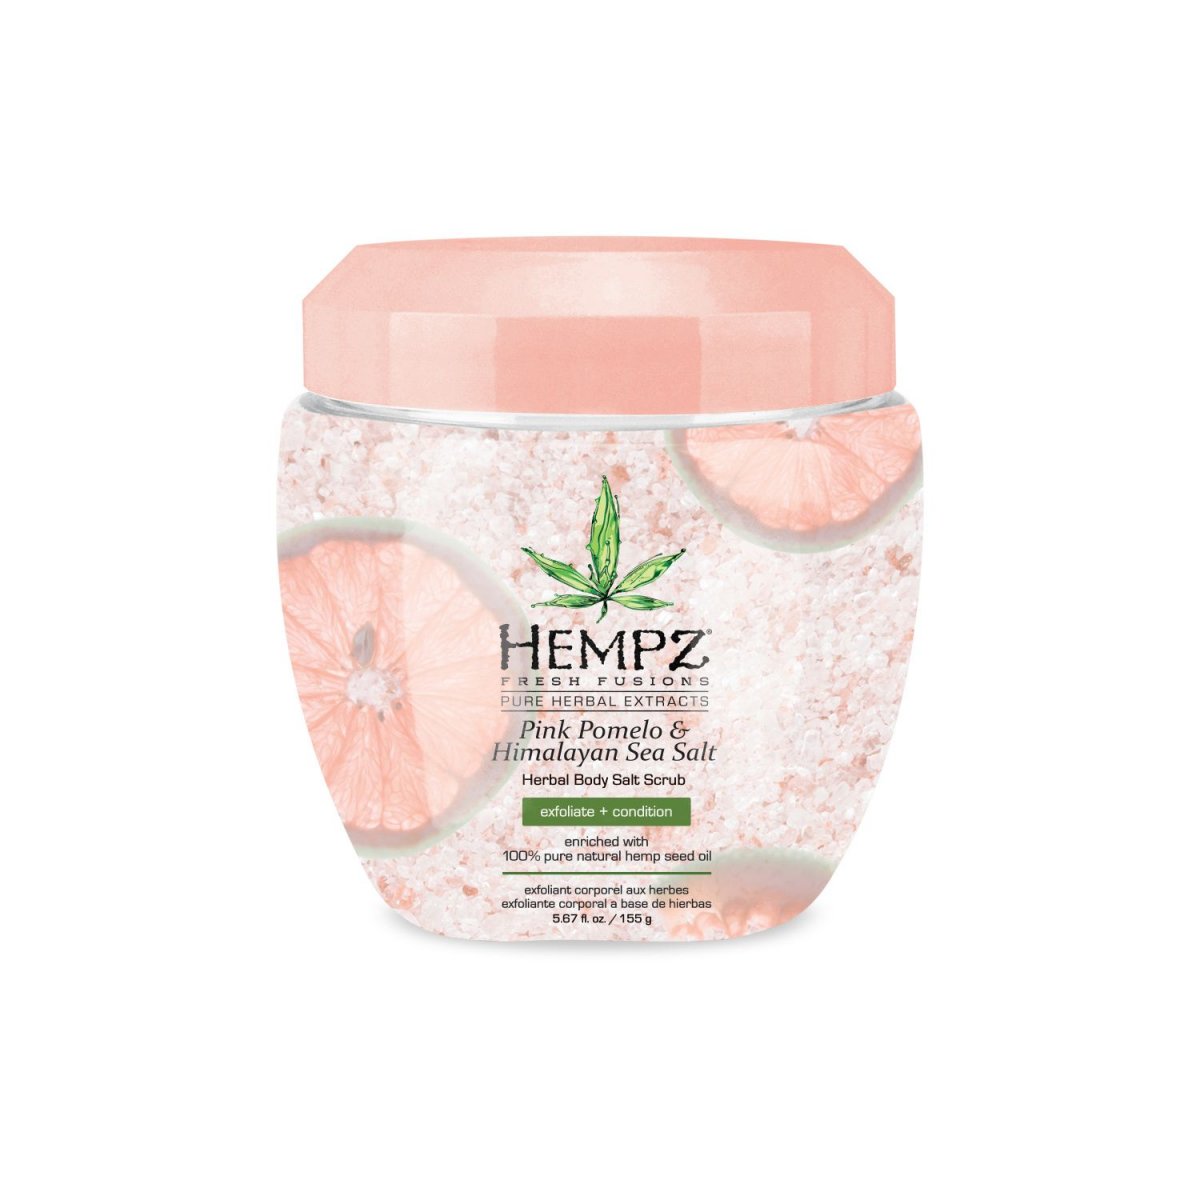 Hempz Pink Pomelo & Himalayan Sea Salt Herbal Body Salt Scrub - Скраб для тела Помело и Гималайская соль 155 гр